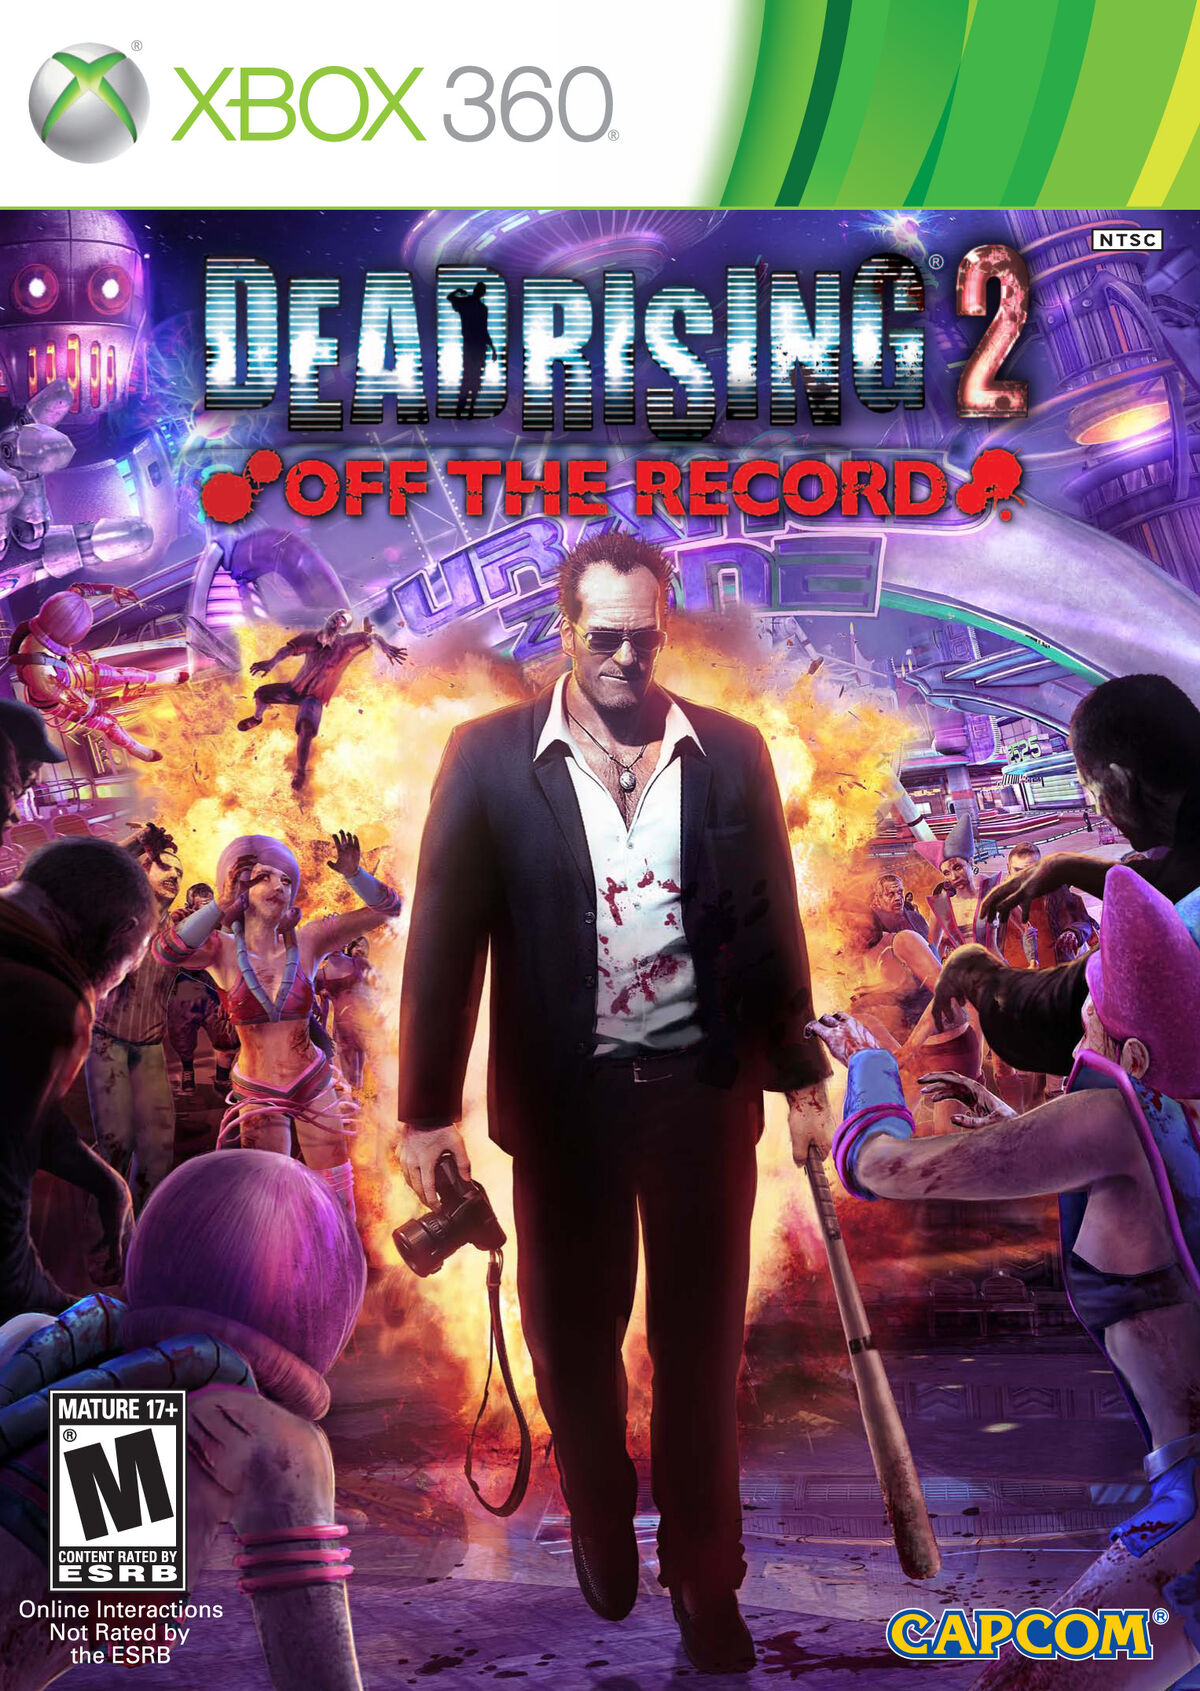 Dead Rising 3 - Metacritic